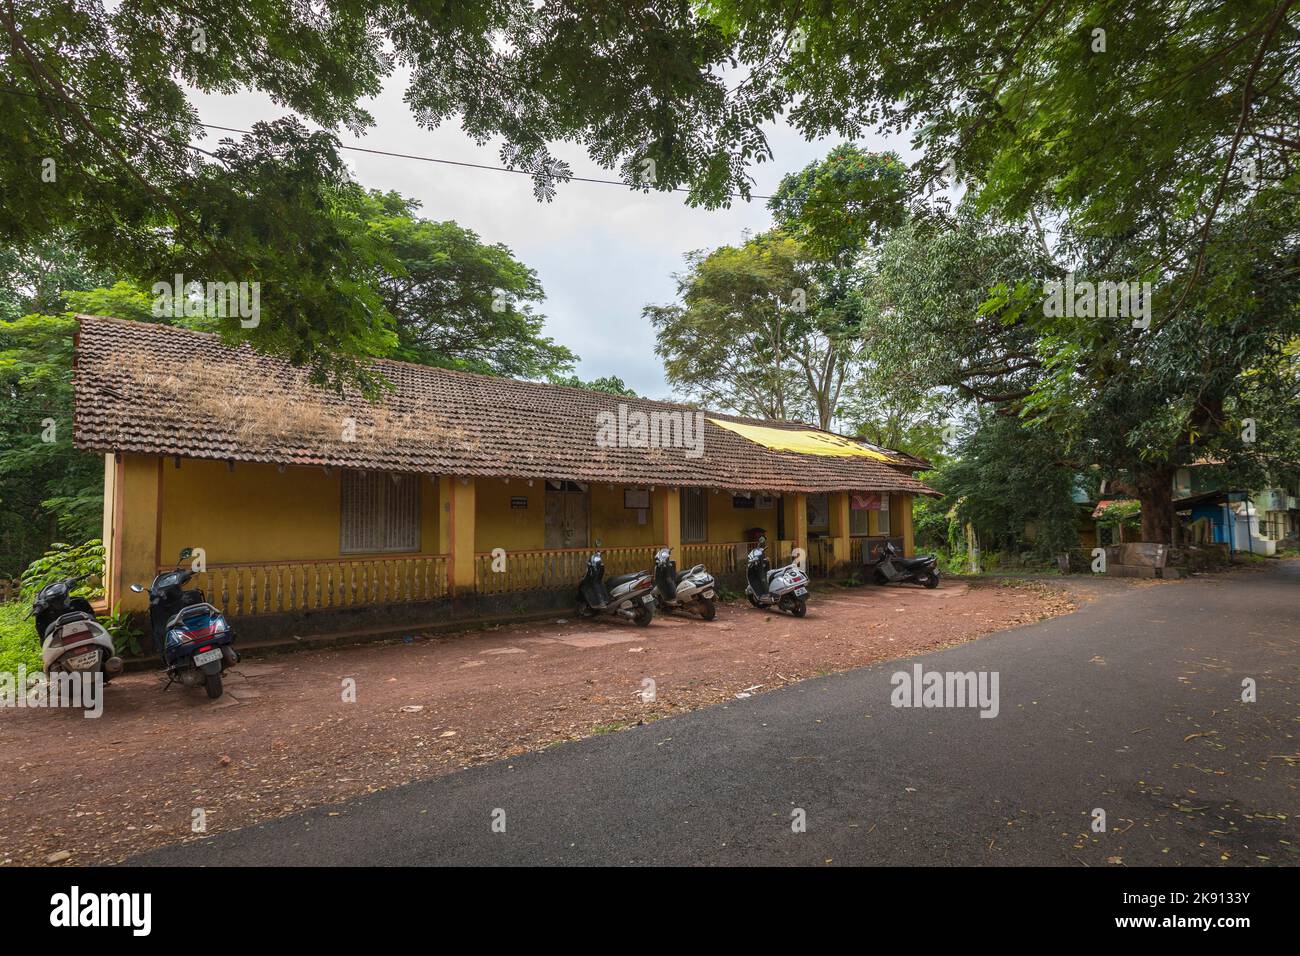 Ufficio postale di Loutolim a Orgao, Loutolim, Goa India Foto Stock